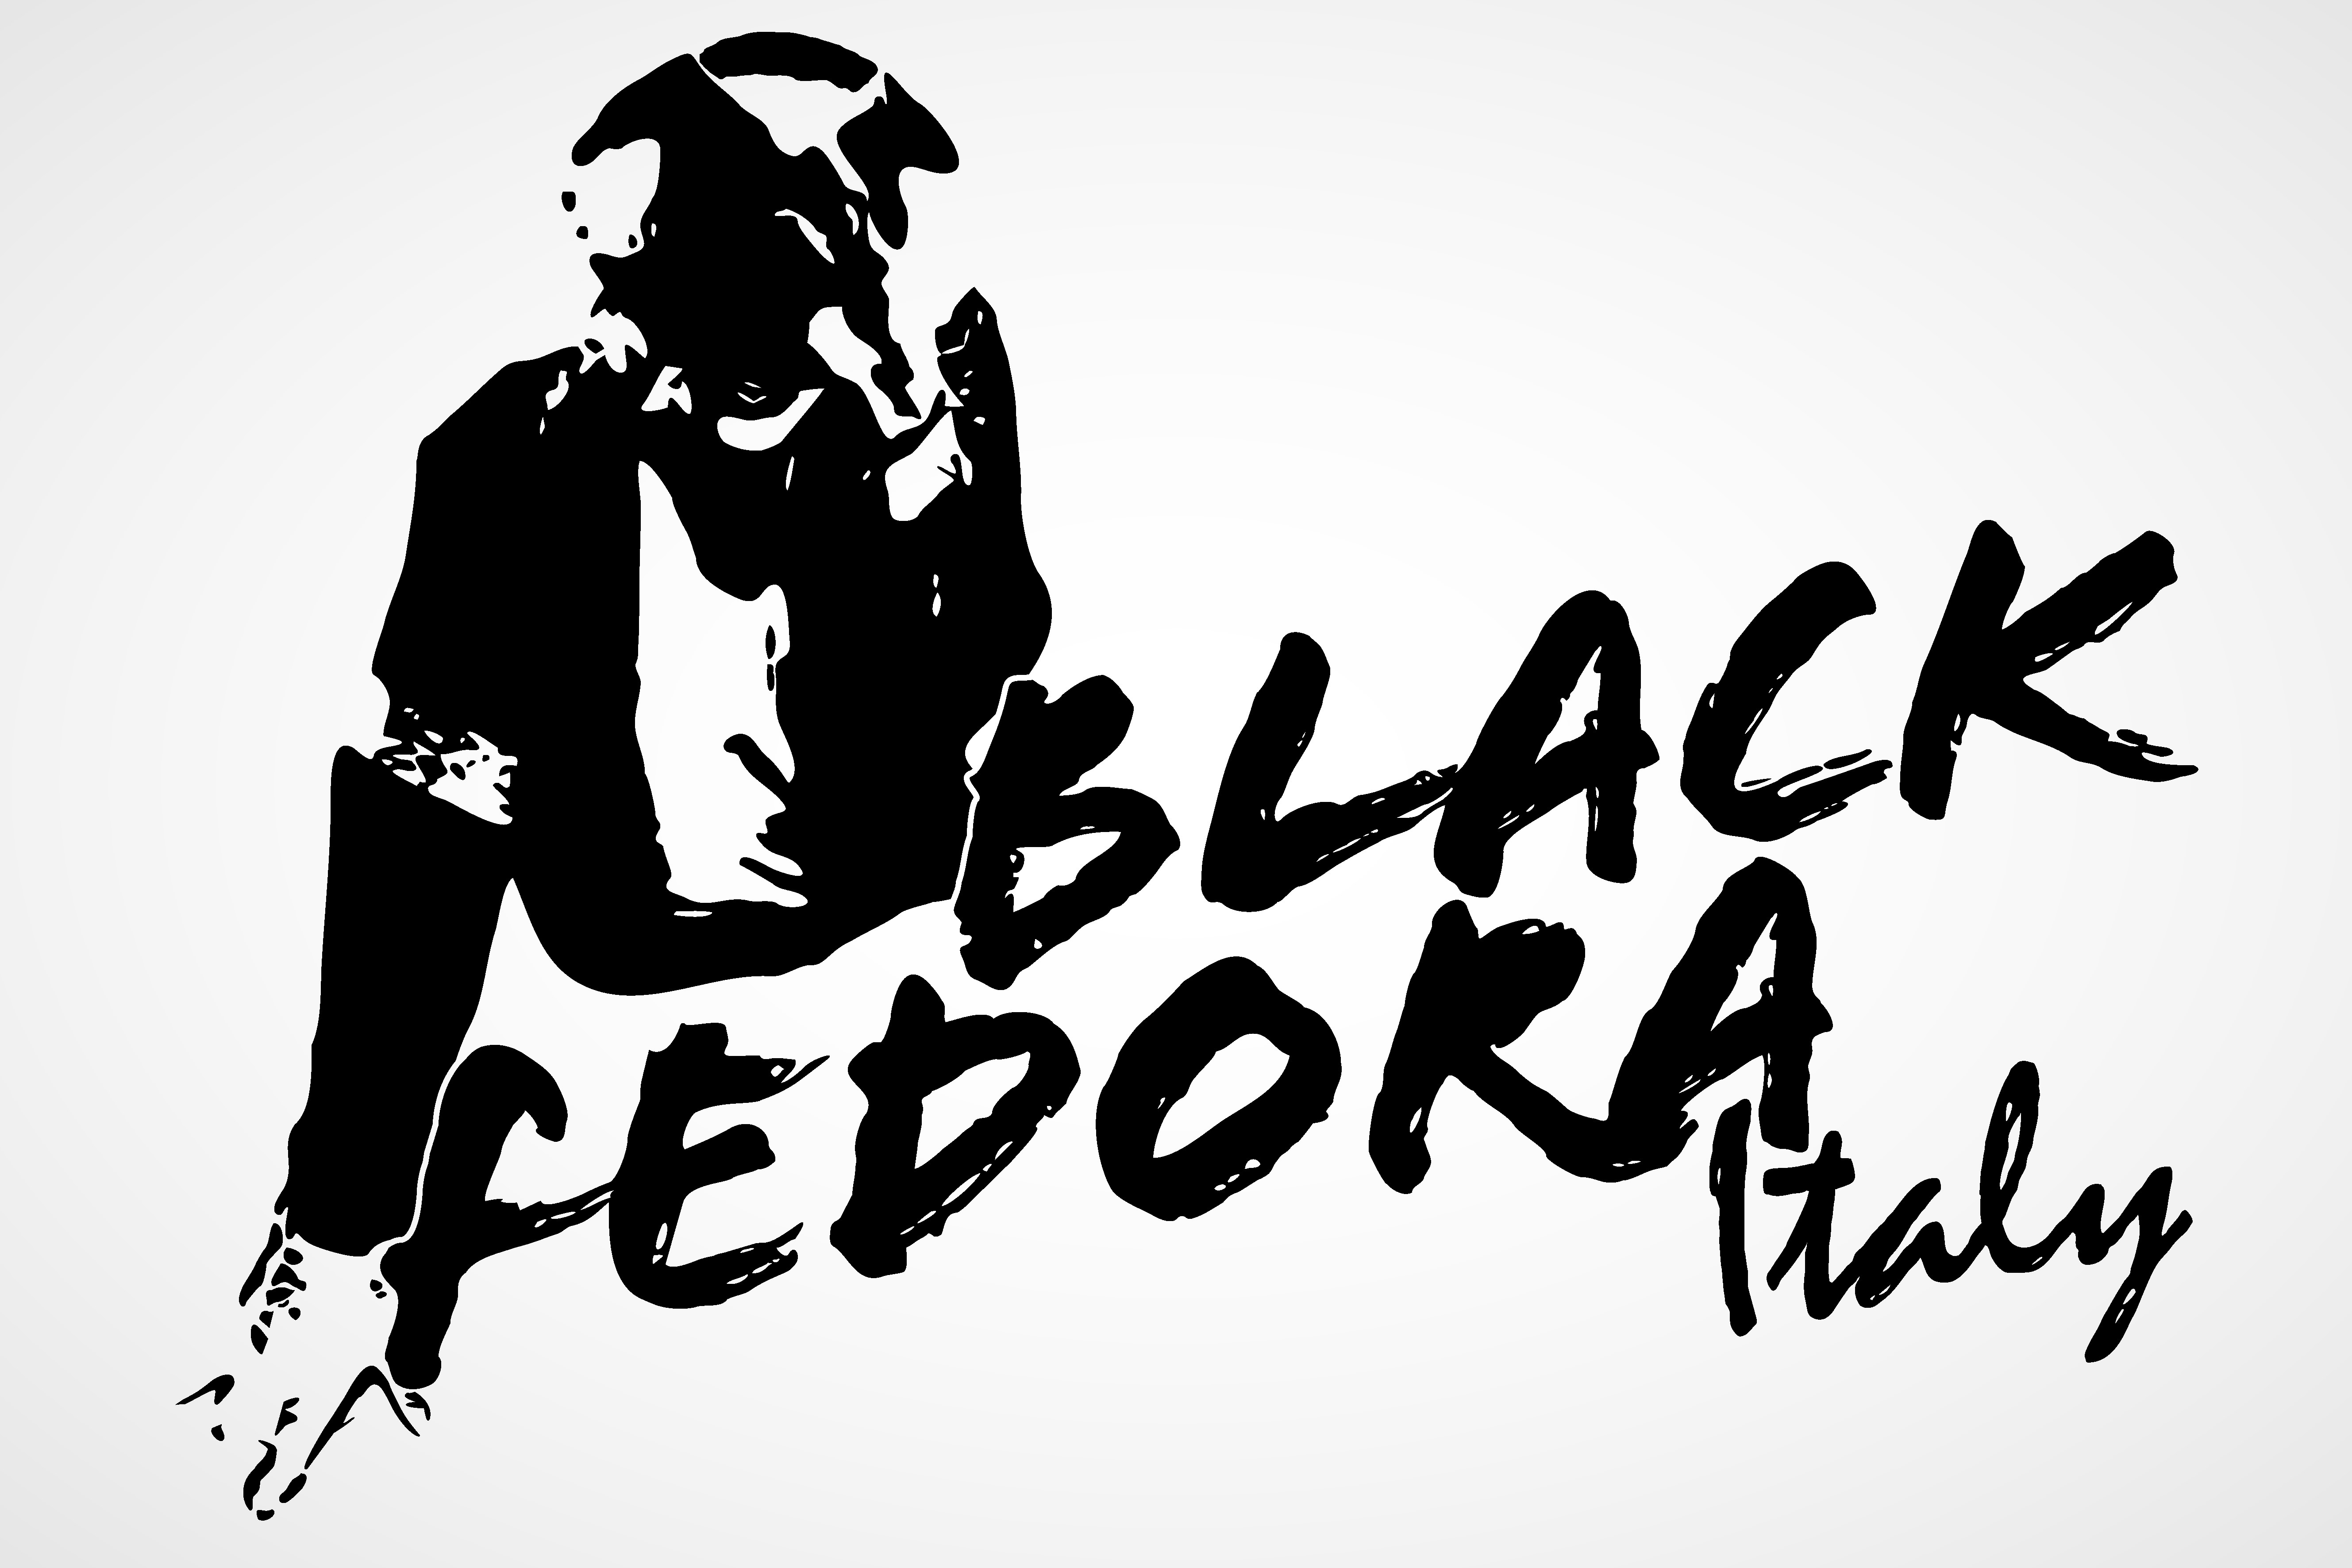 HiStory: insieme ai Black Fedora Italy per portare avanti la Michael Jackson's Legacy